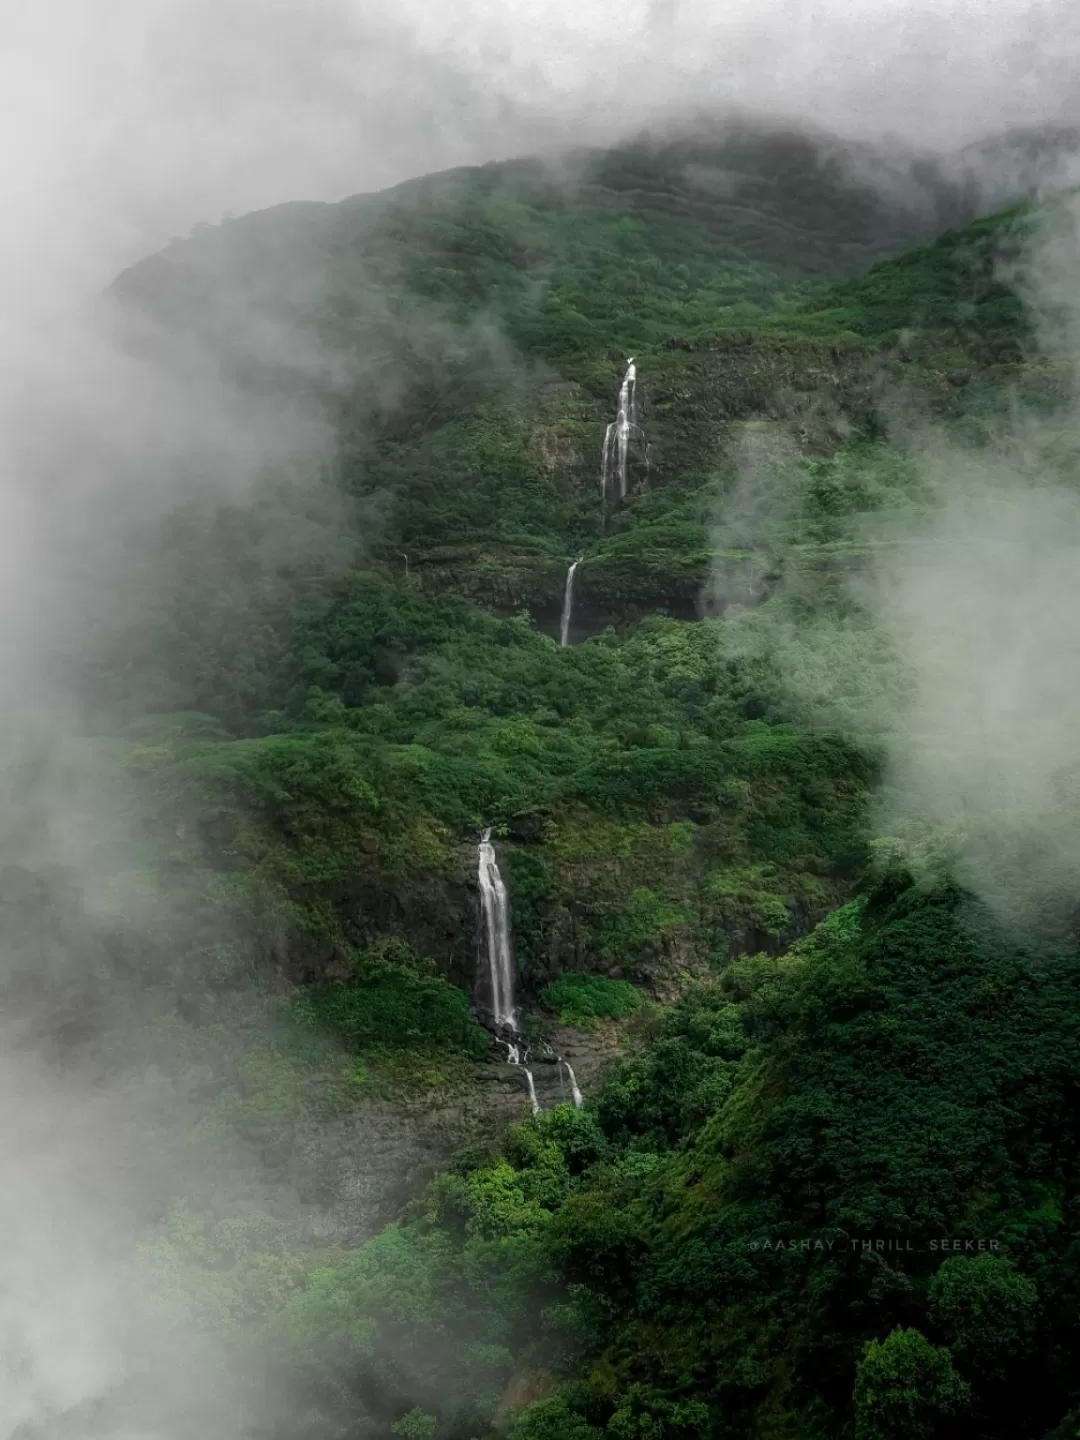 Photo of Kundalika Valley By aashay_thrill_seeker 